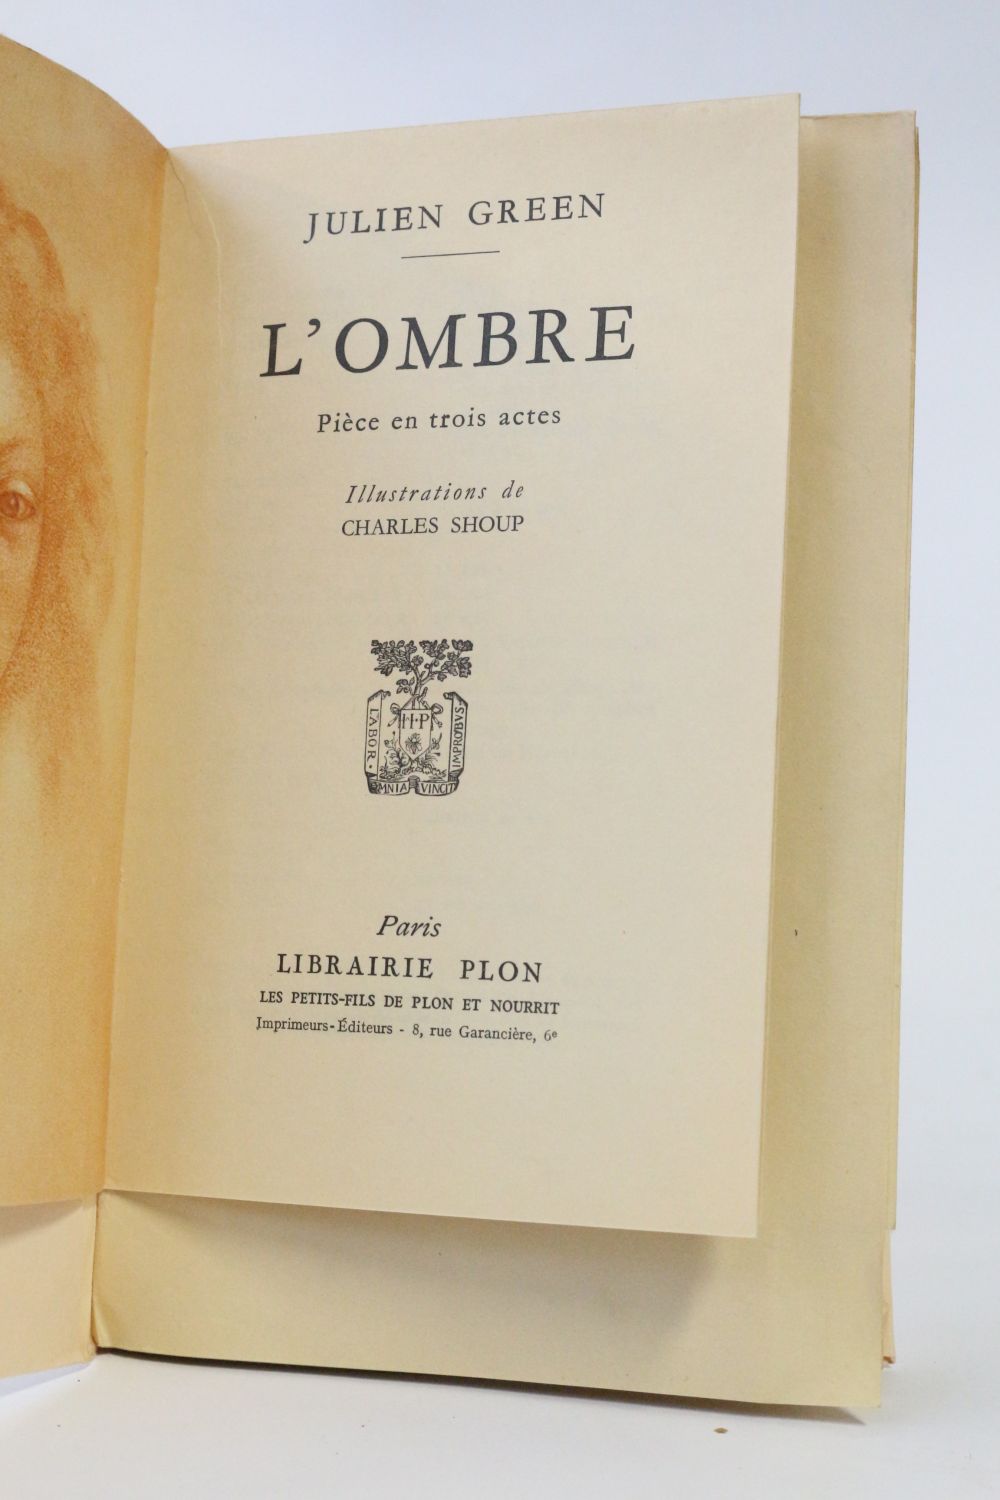 Illustrations de Charles SHOUP Edition originale GREEN JULIEN "L'Ombre" 